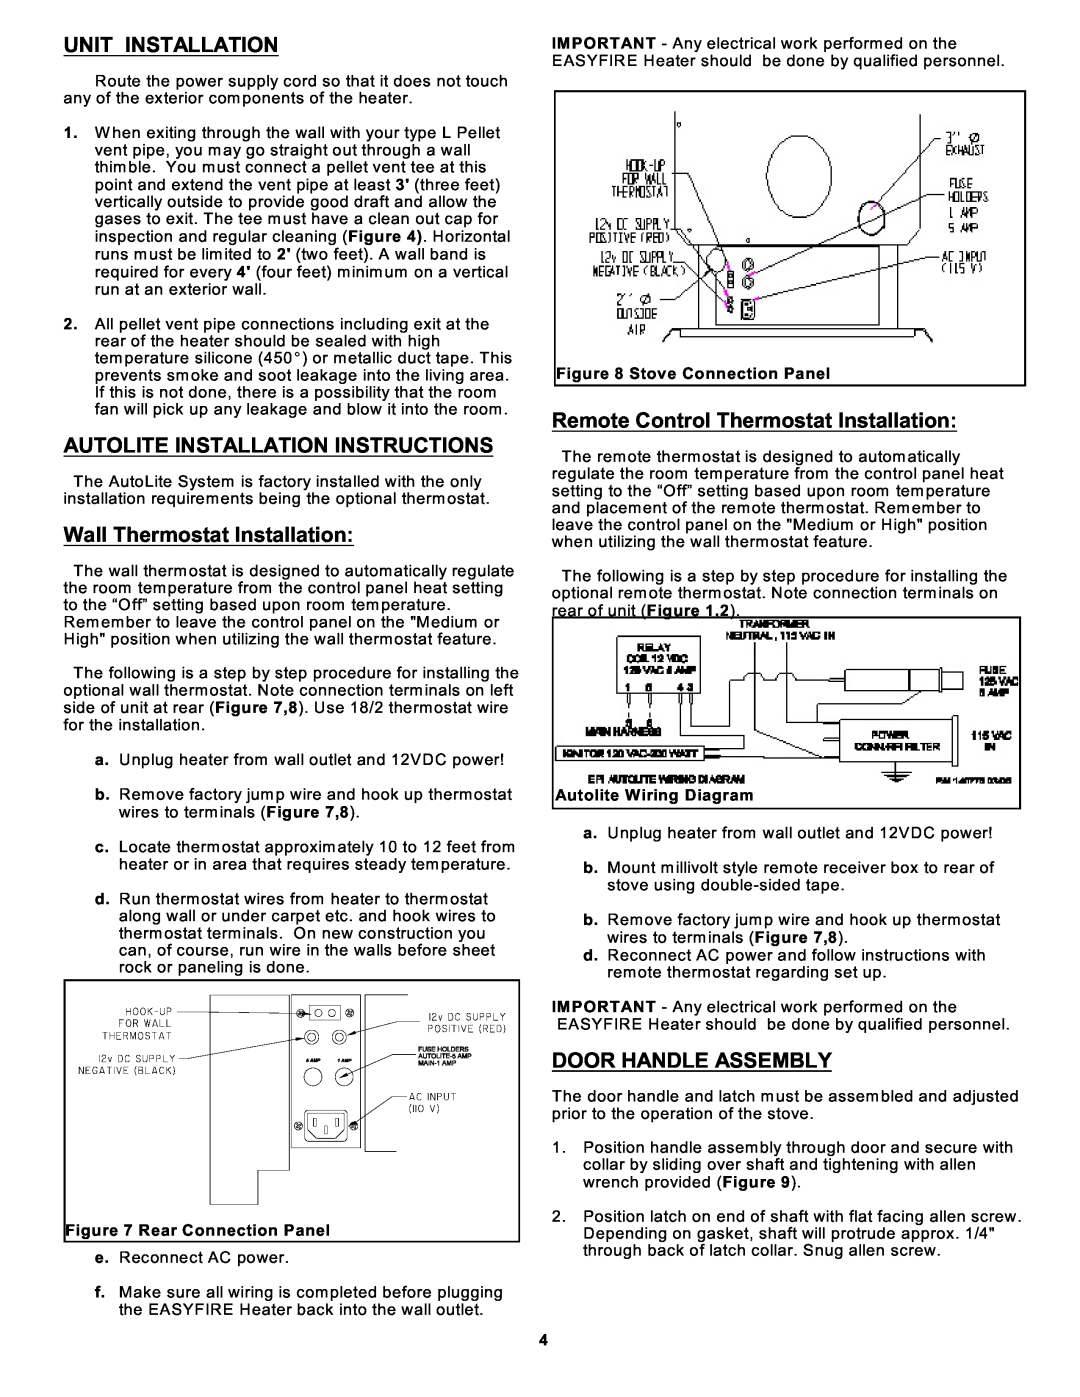 Sierra Products EF5001B-AL owner manual Unit Installation, Autolite Installation Instructions, Wall Thermostat Installation 